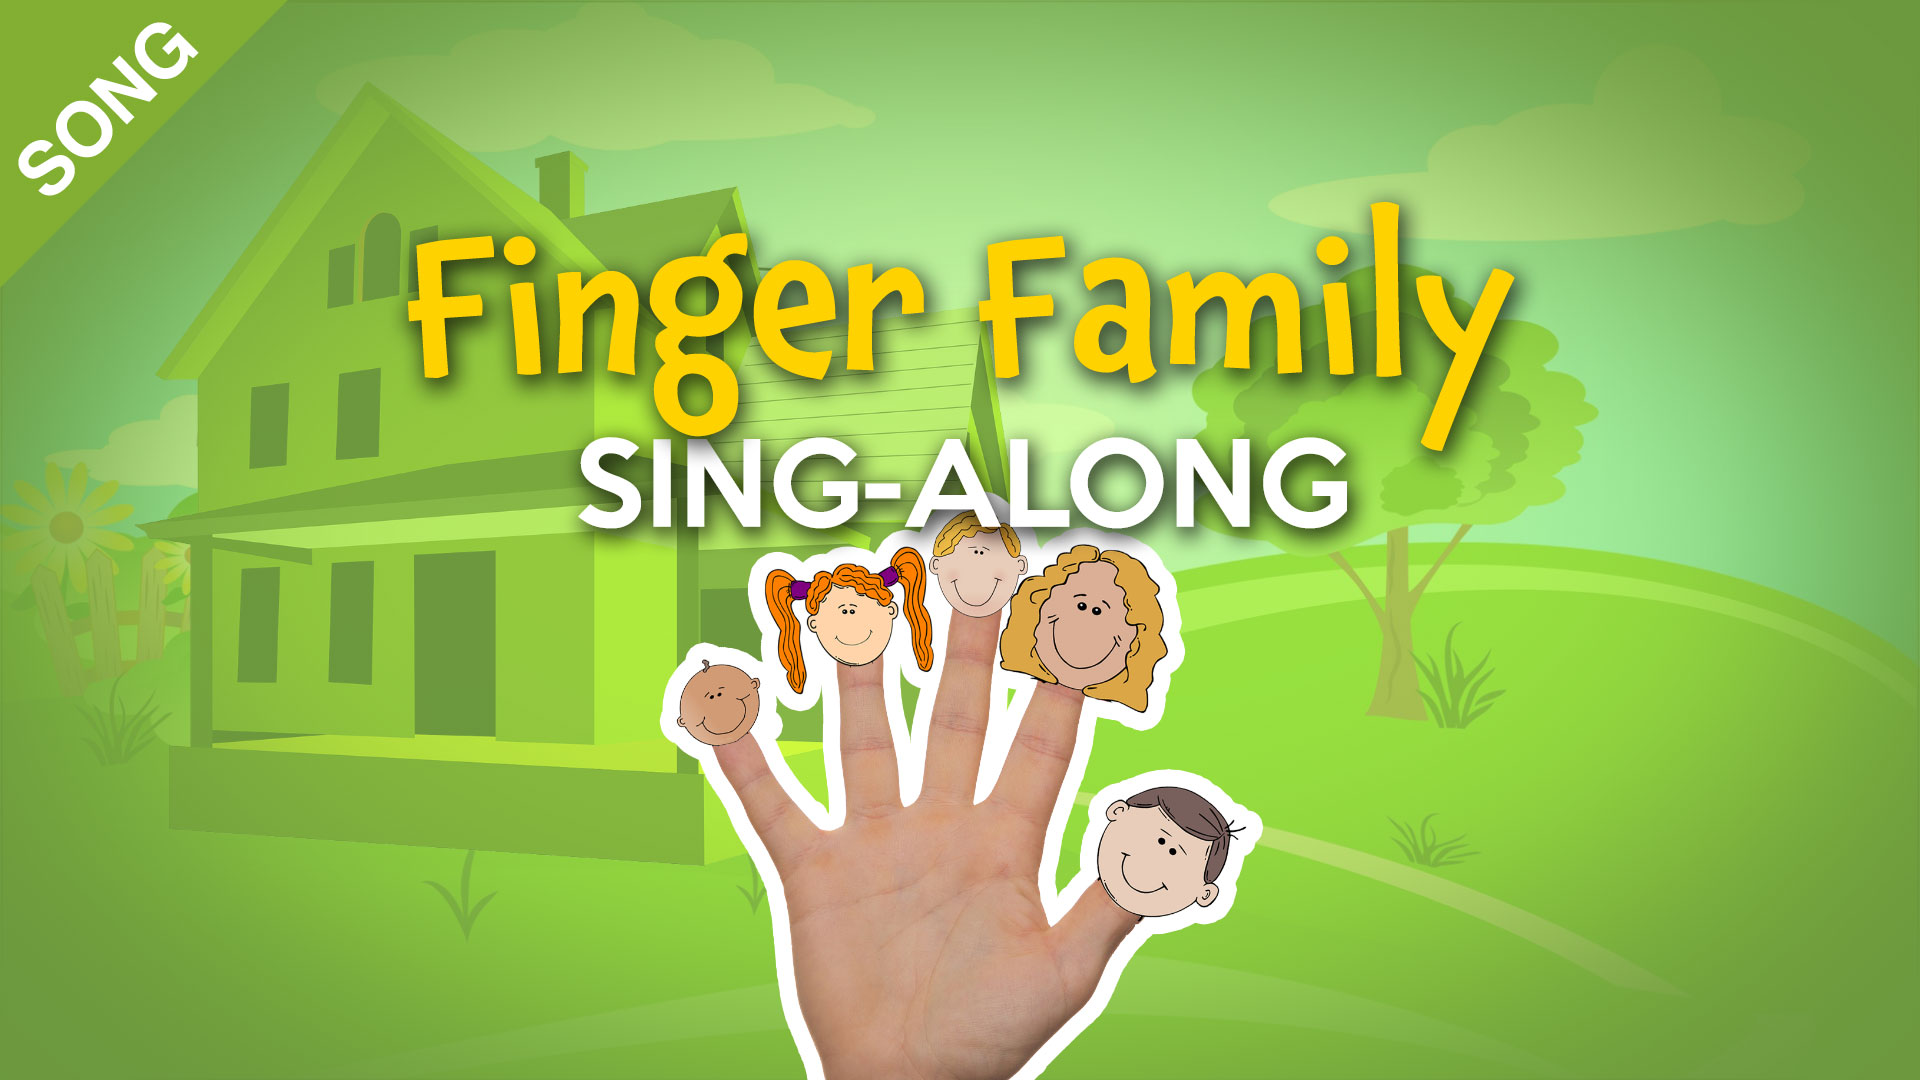 Finger Family Song Original Version Family Sing Daddy finger along голубой.